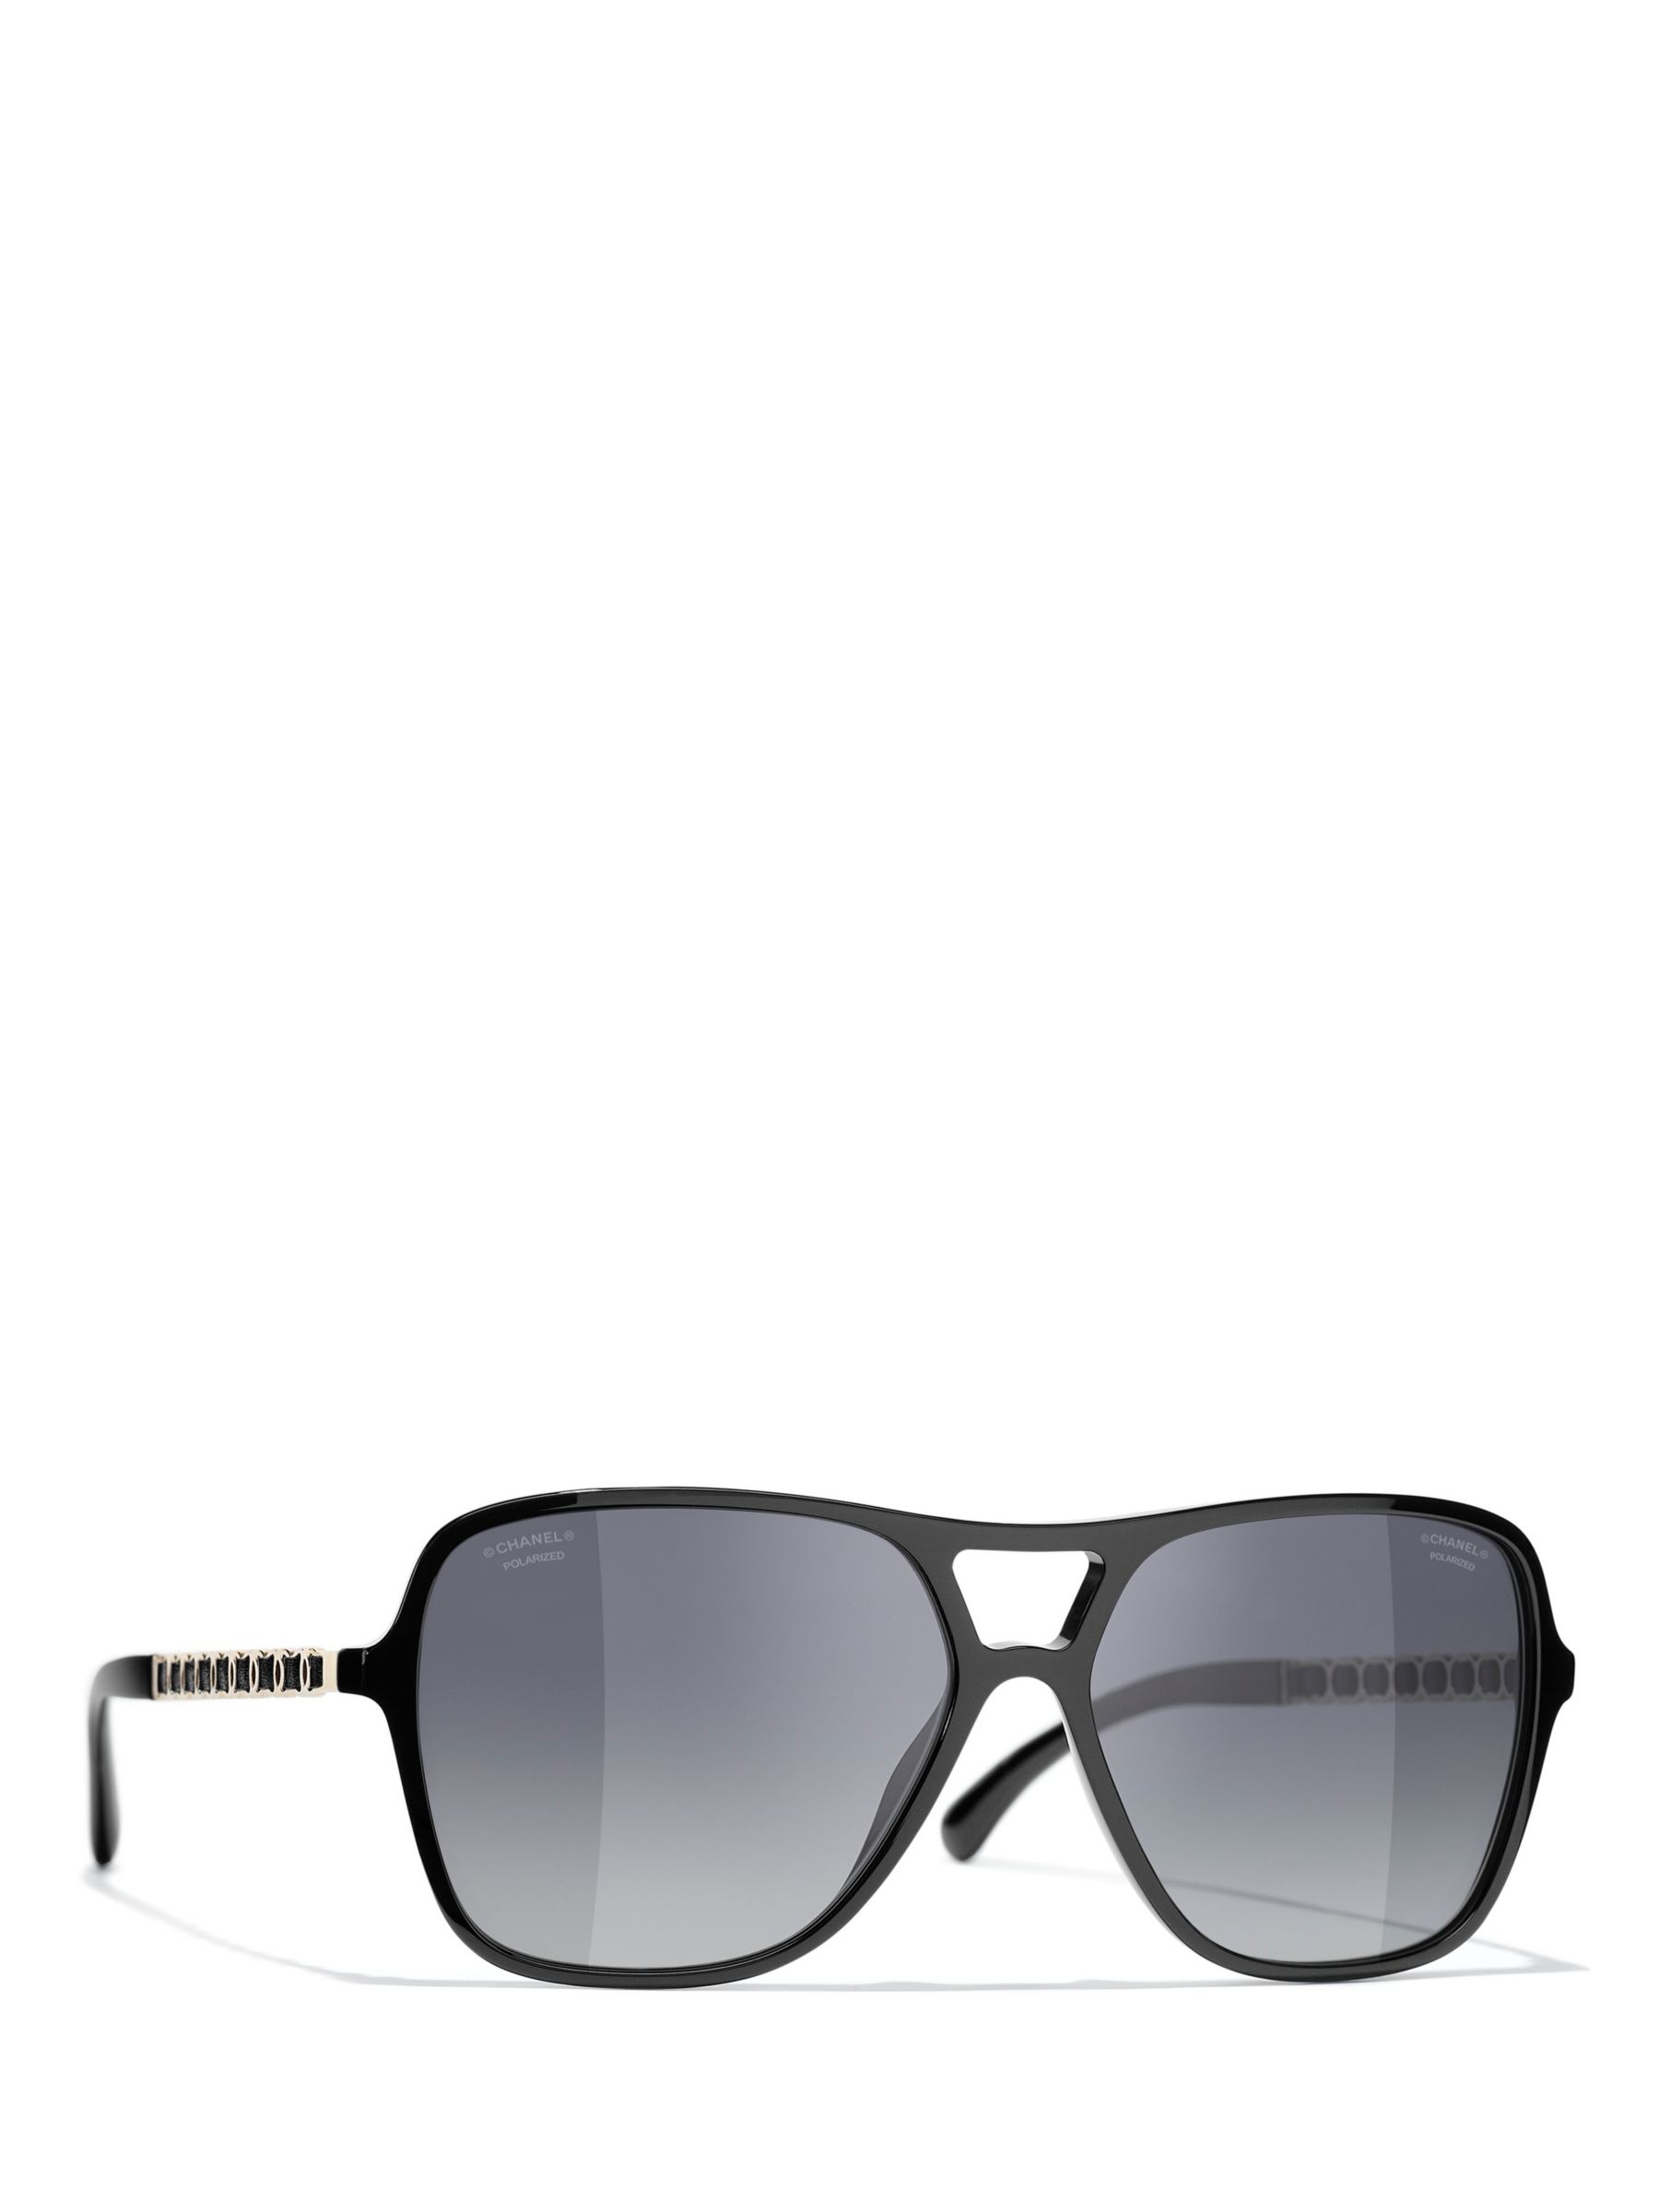 CHANEL Square Sunglasses CH5439Q Black/Grey Gradient at John Lewis &  Partners